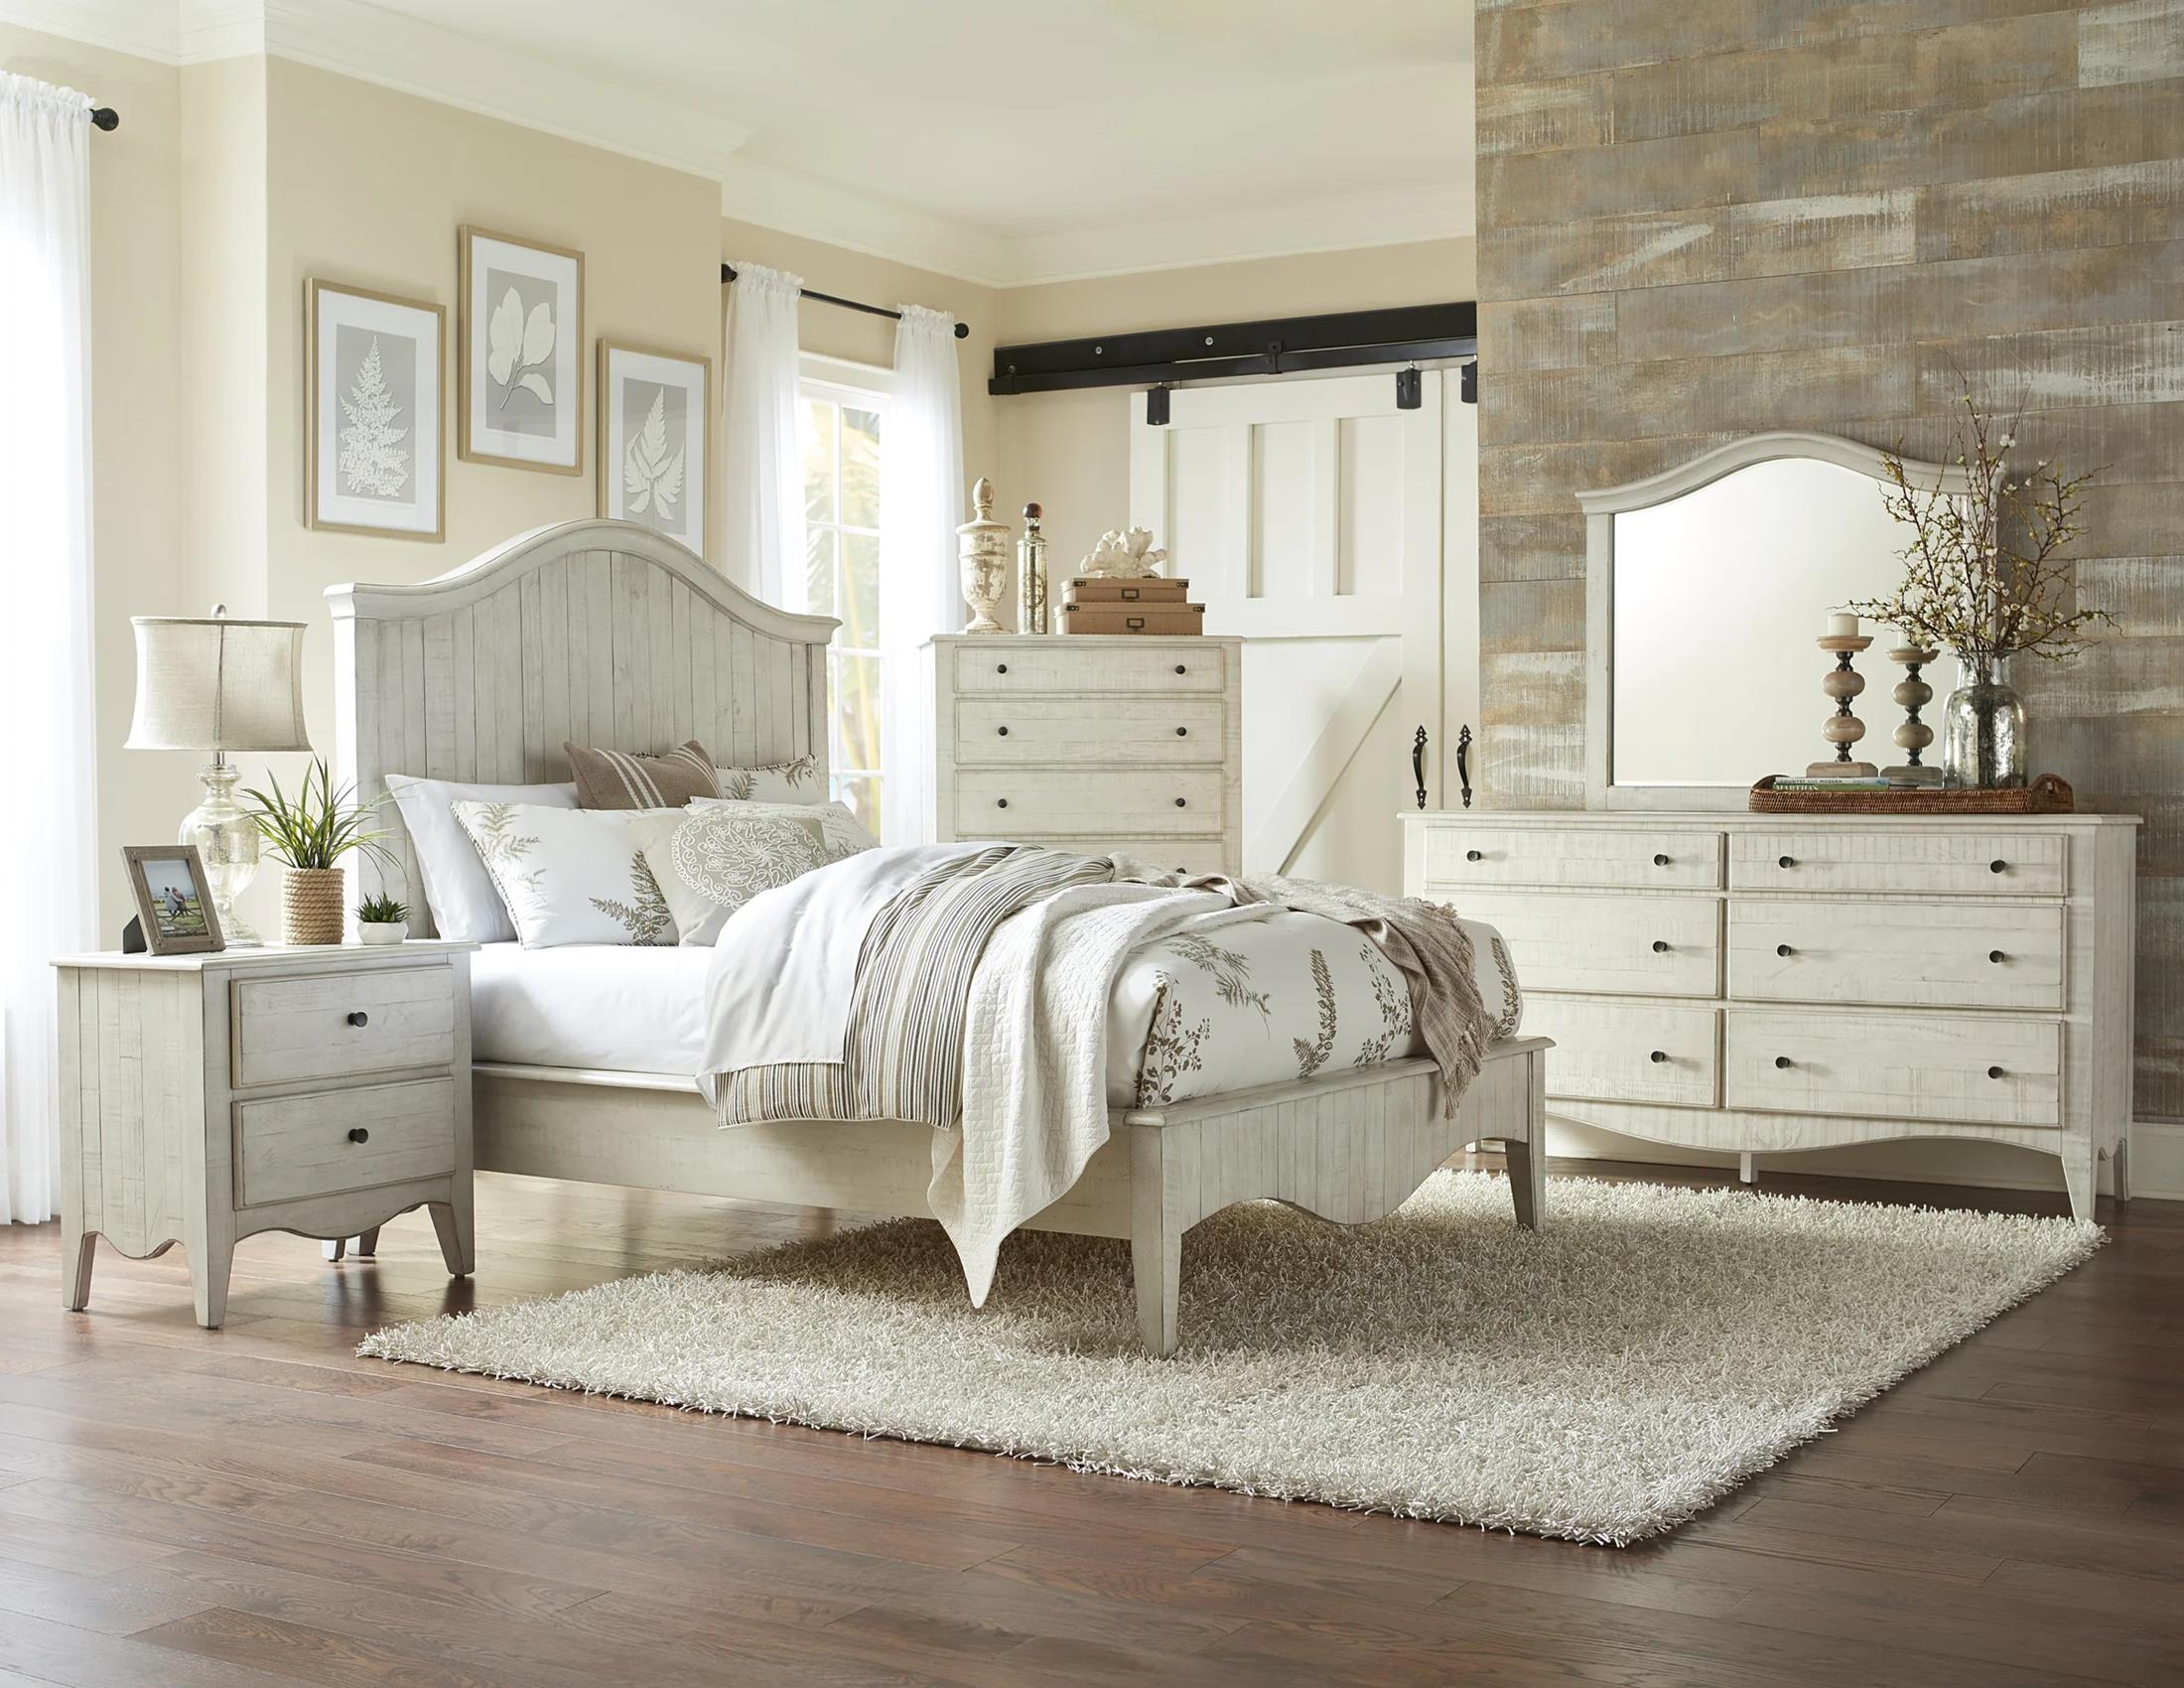 primrose bedroom furniture the range